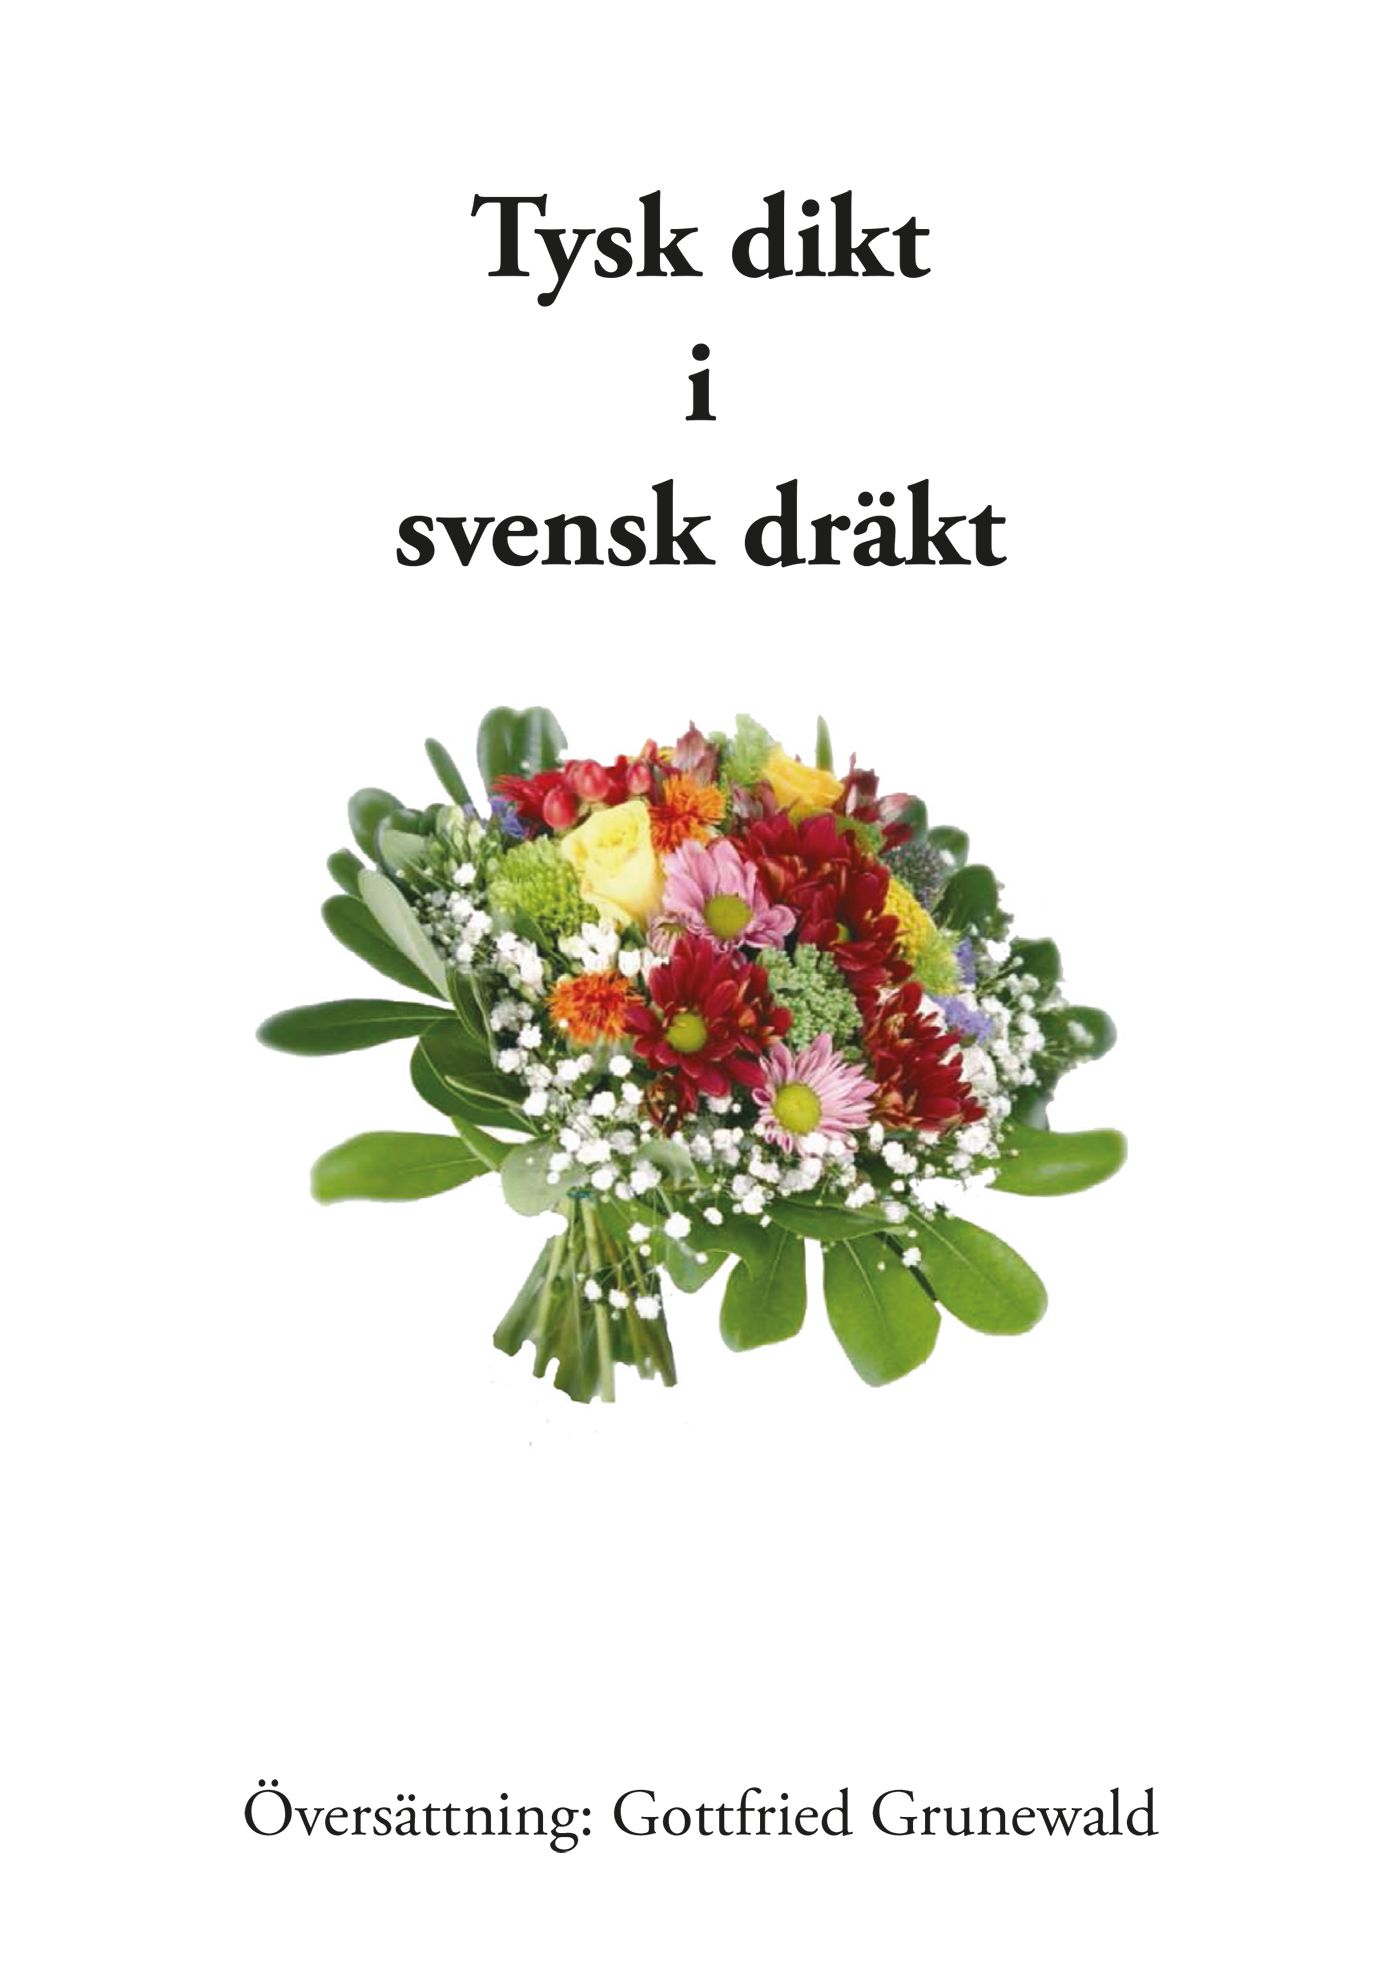 Tysk dikt i svensk dräkt, eBook by Gottfried Grunewald